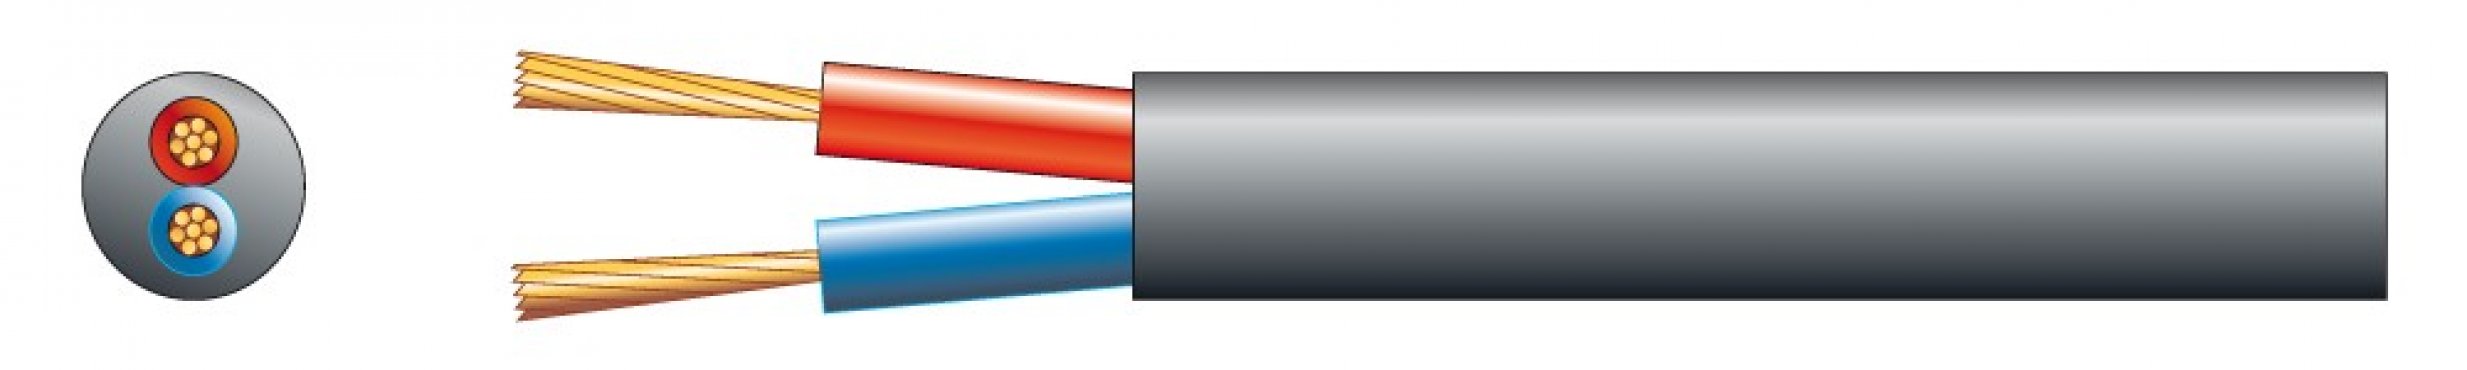 Power Dynamics RX14 reproduktorový kabel 2x2,5 mm² 100m černý